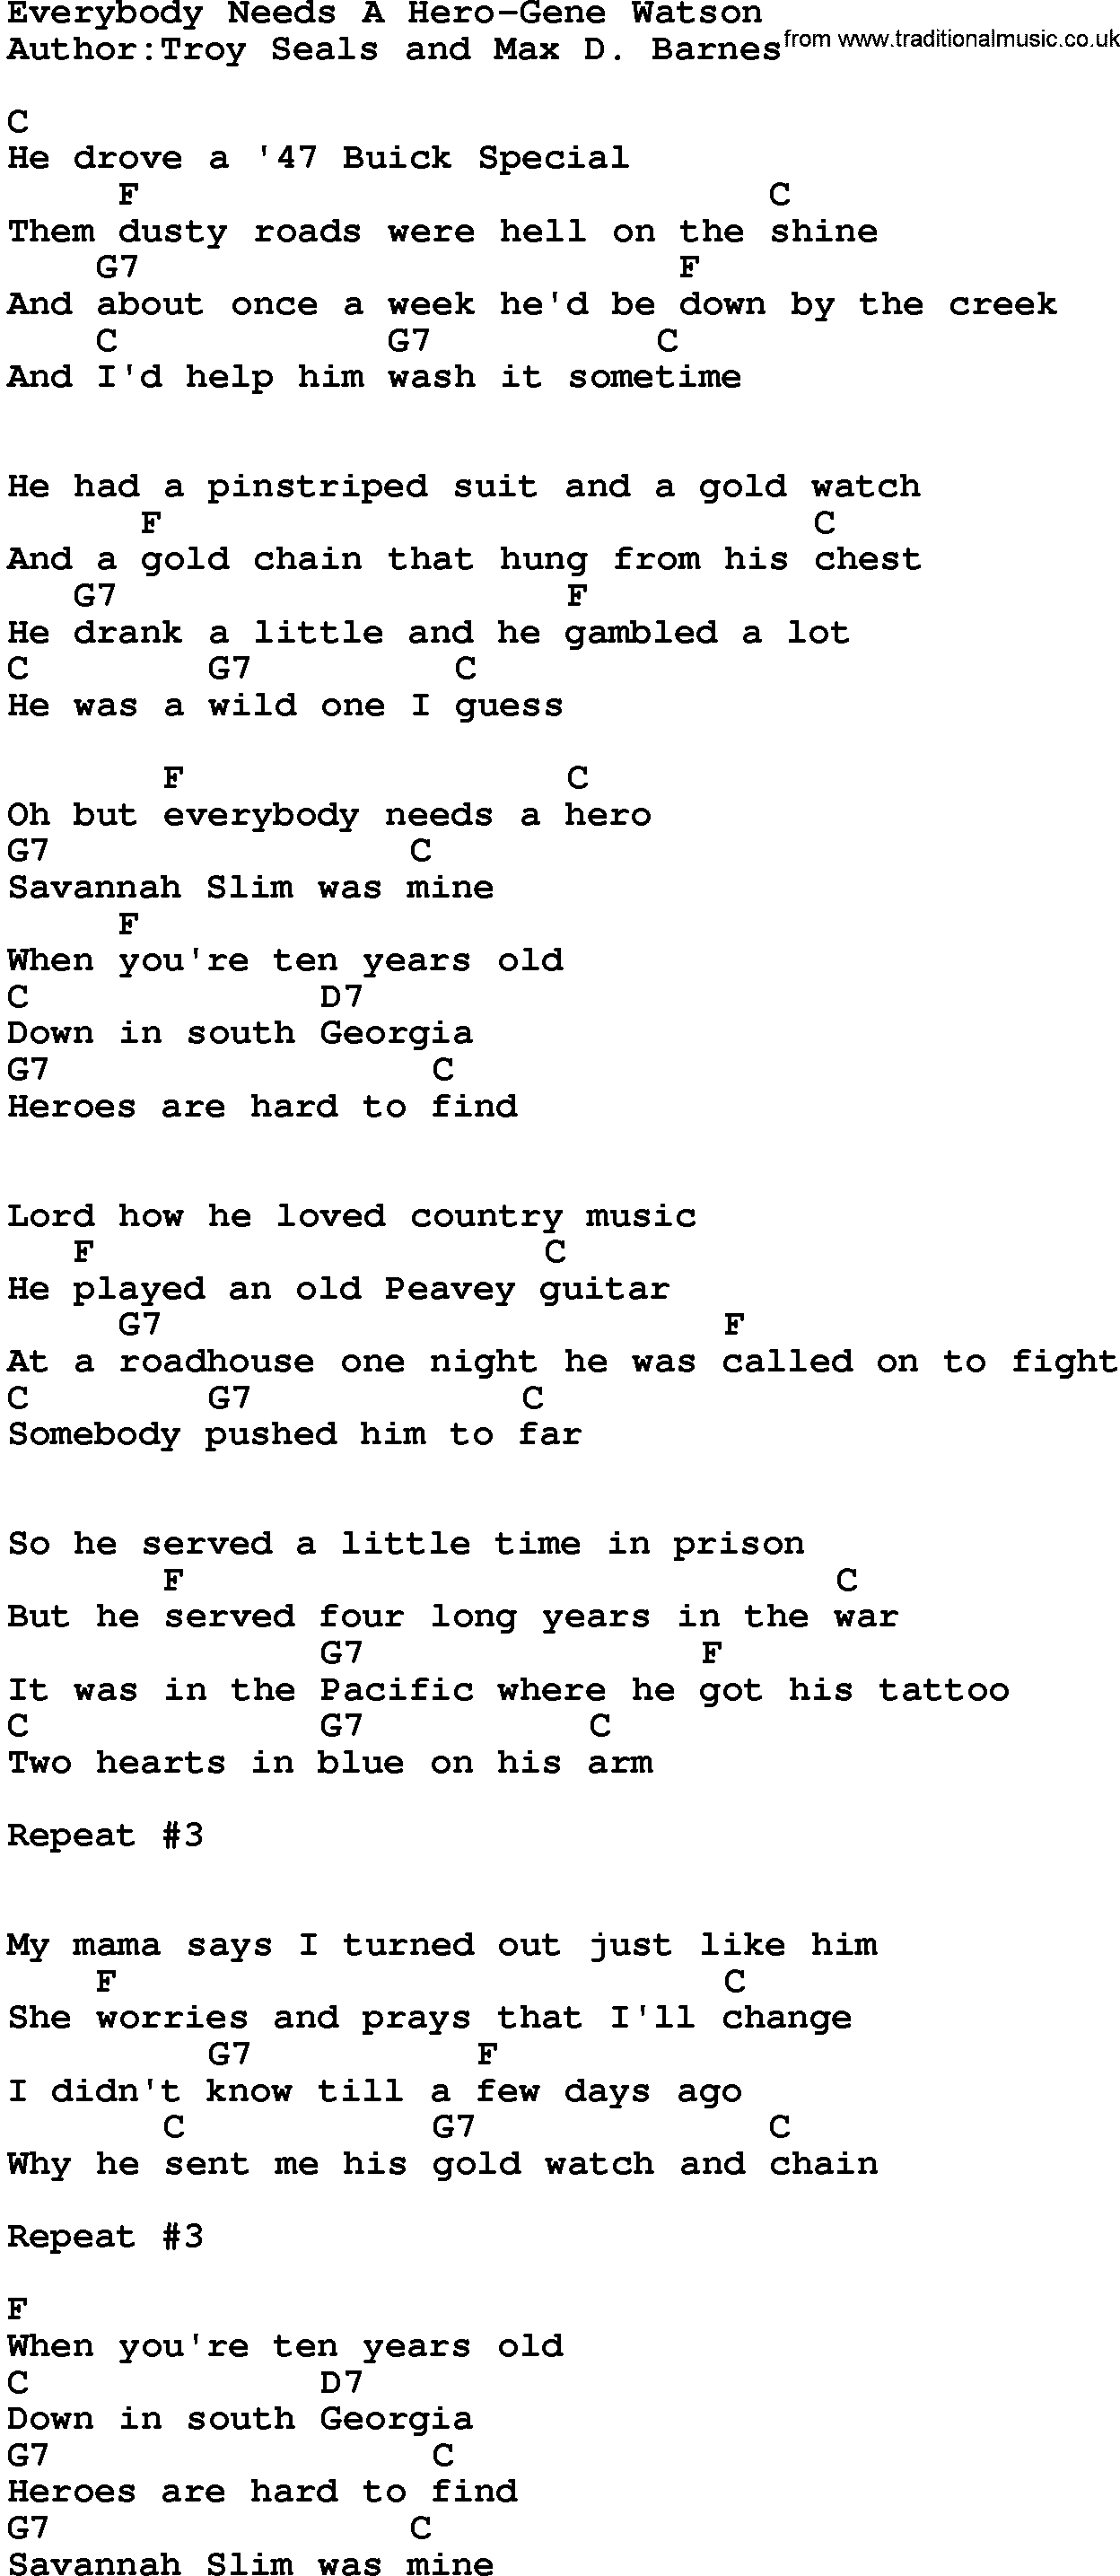 Country music song: Everybody Needs A Hero-Gene Watson lyrics and chords